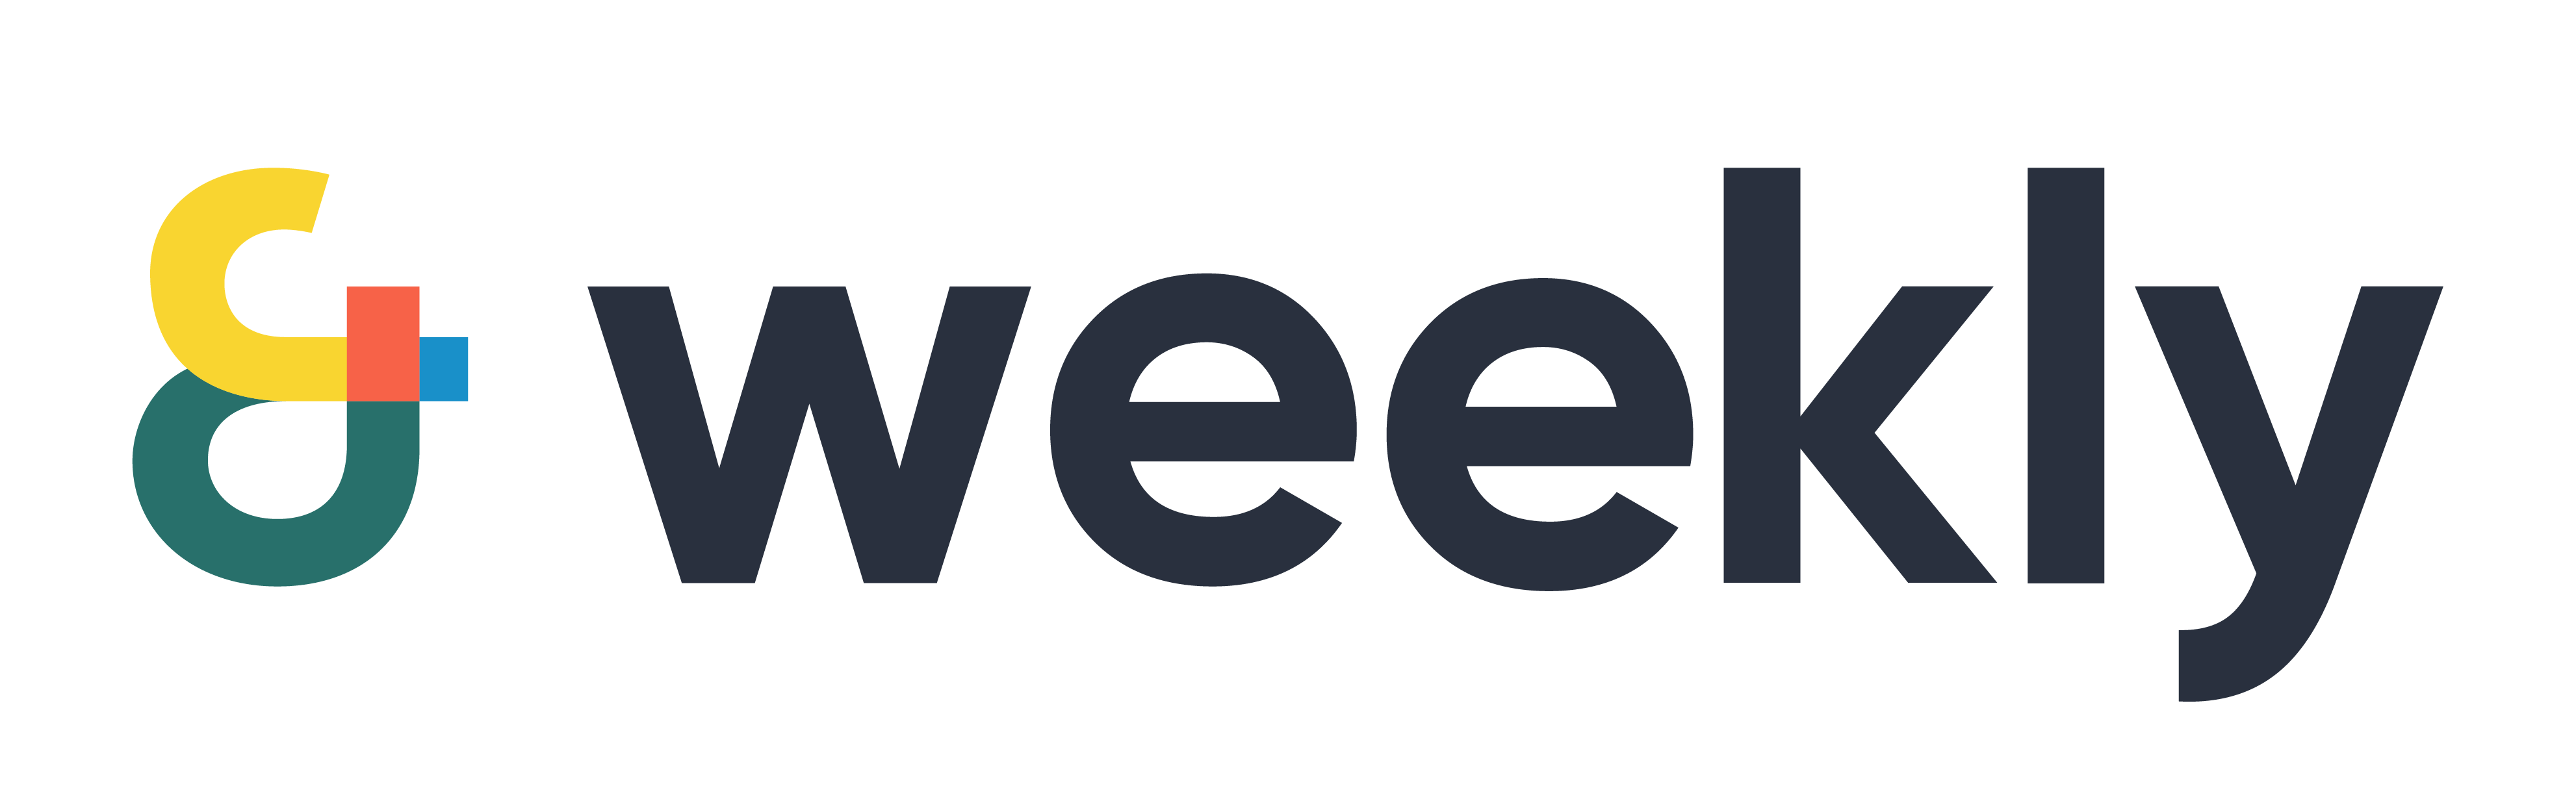 Logo_&weekly